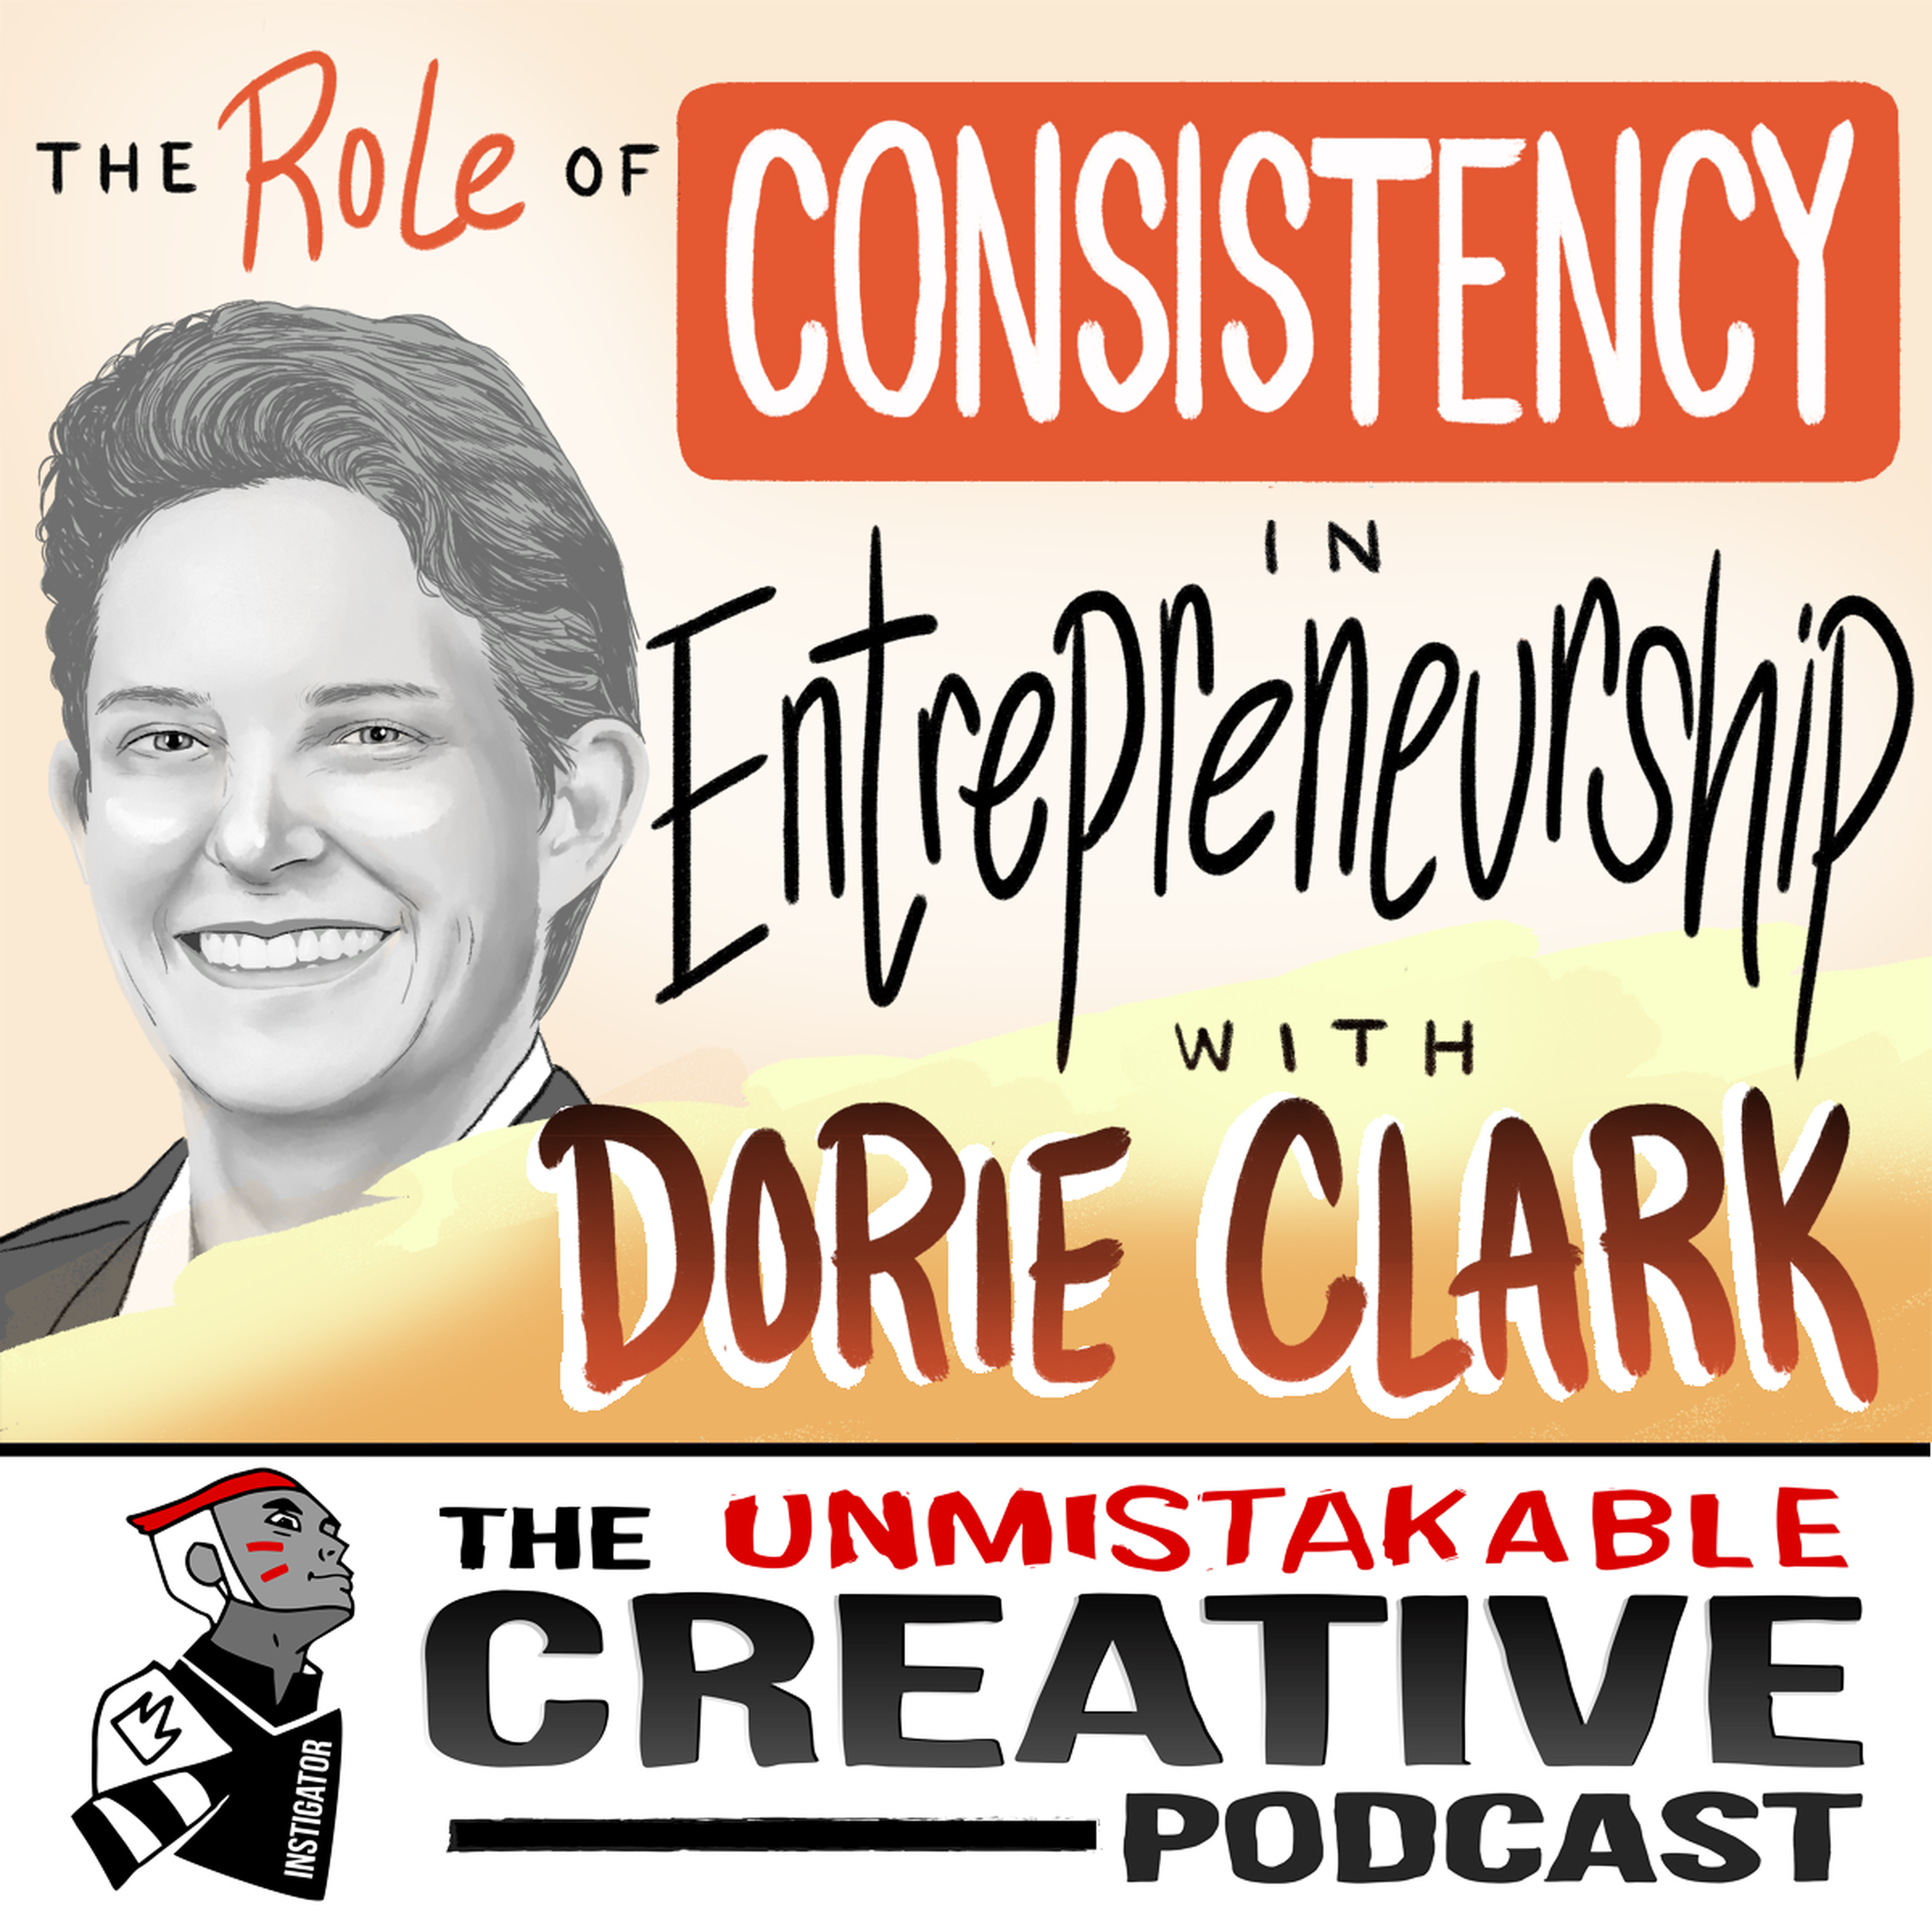 Dorie Clark: The Role of Consistency in Entrepreneurship